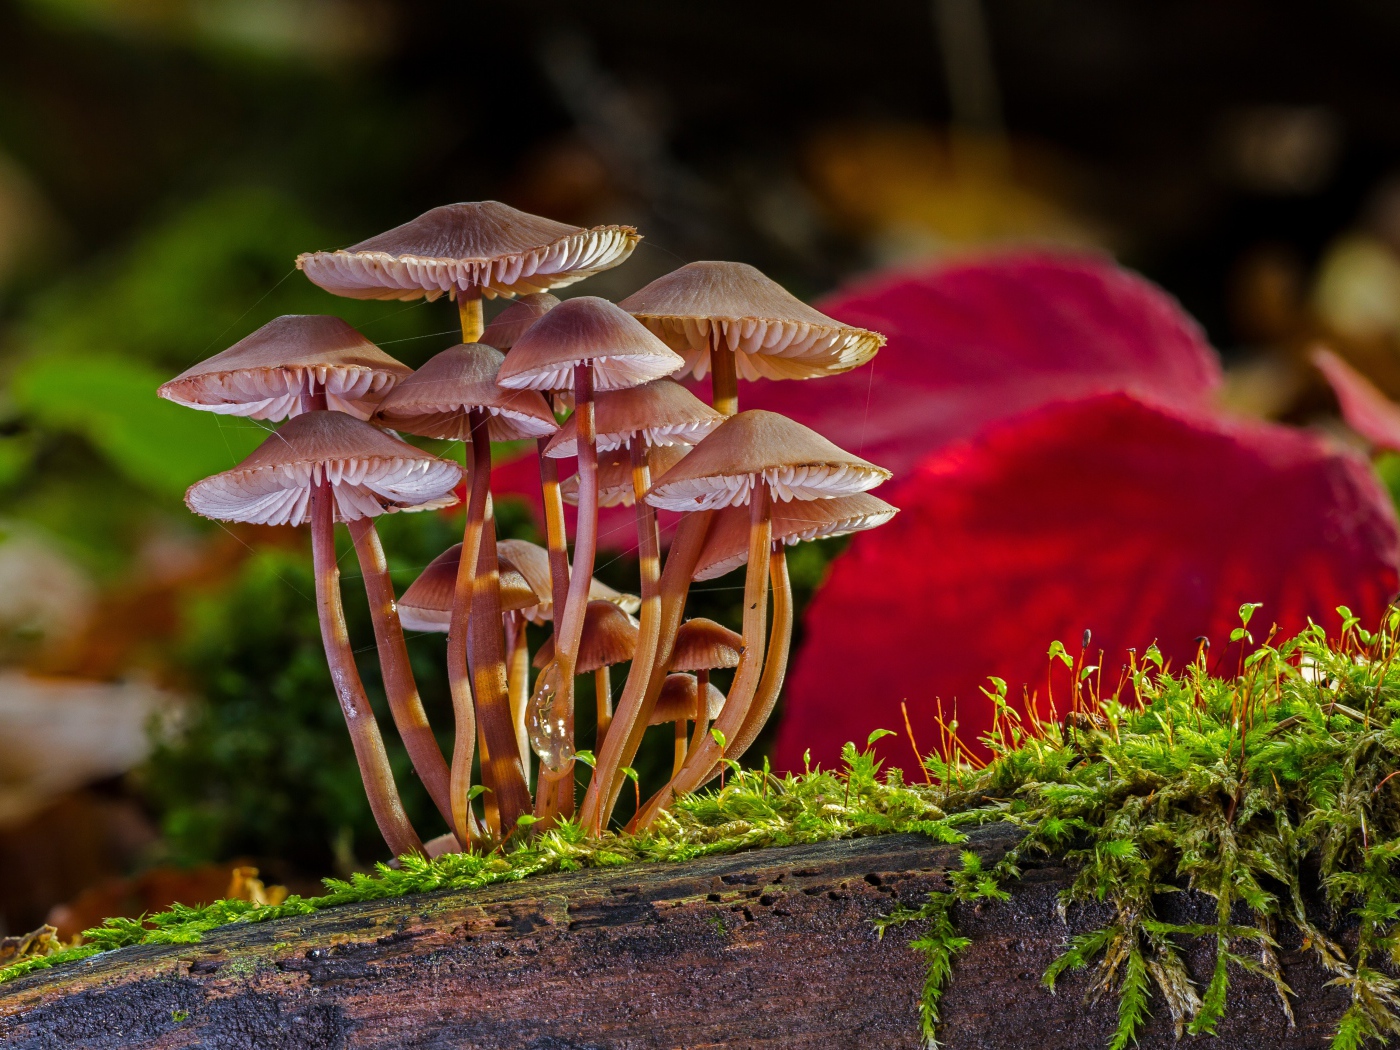 Many small false toadstool mushrooms on a moss-covered tree